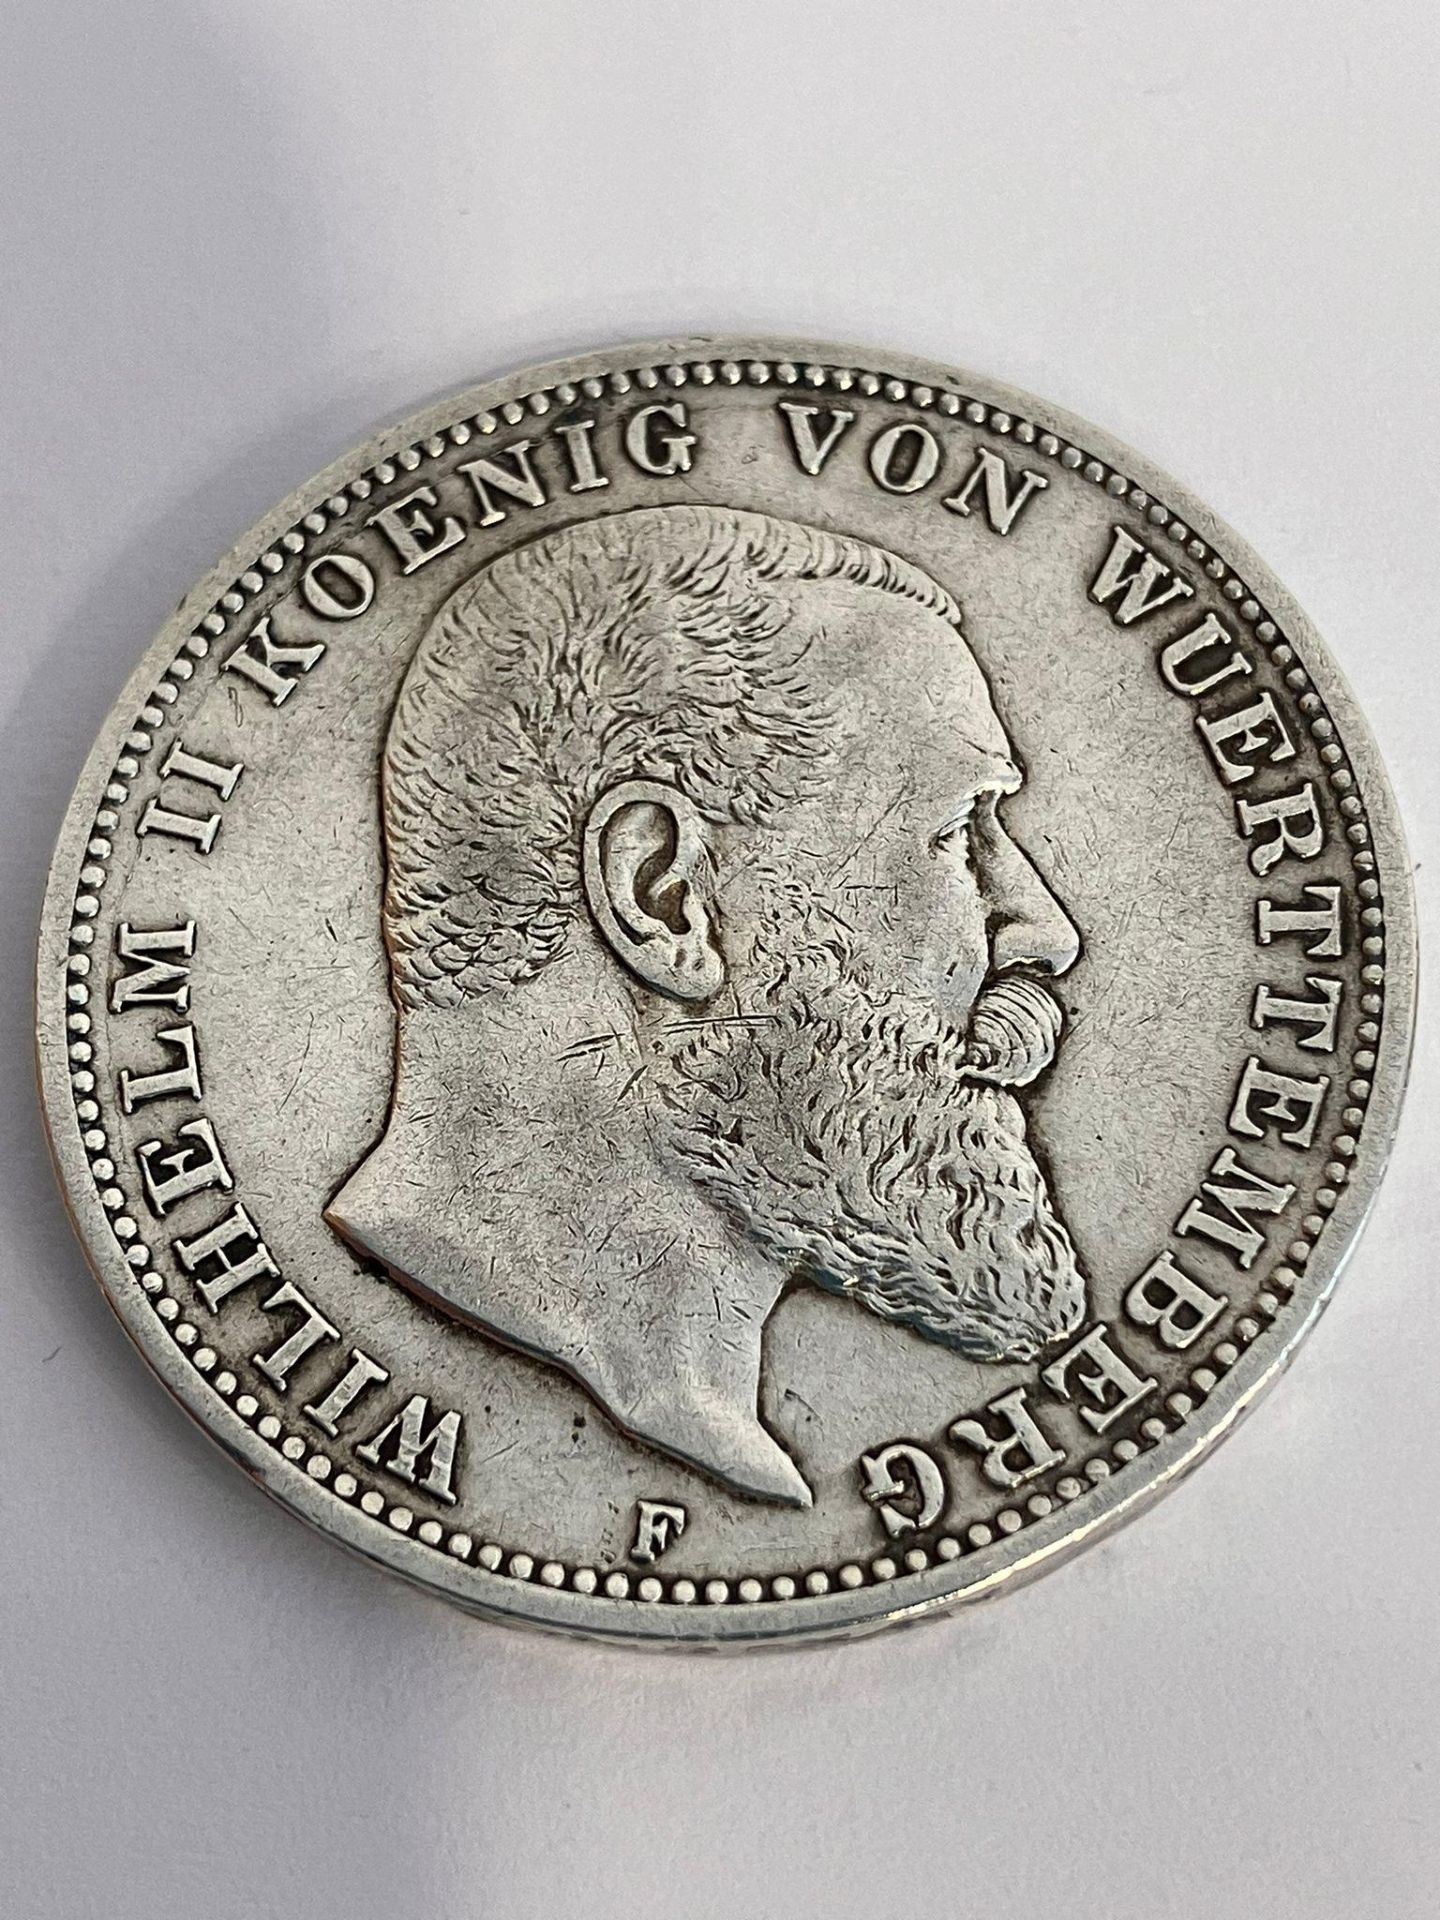 1910 GERMAN SILVER 3 MARK COIN. Rare STUTTGART MINT. WILLHELM II. Very fine/extra fine condition. - Image 2 of 2